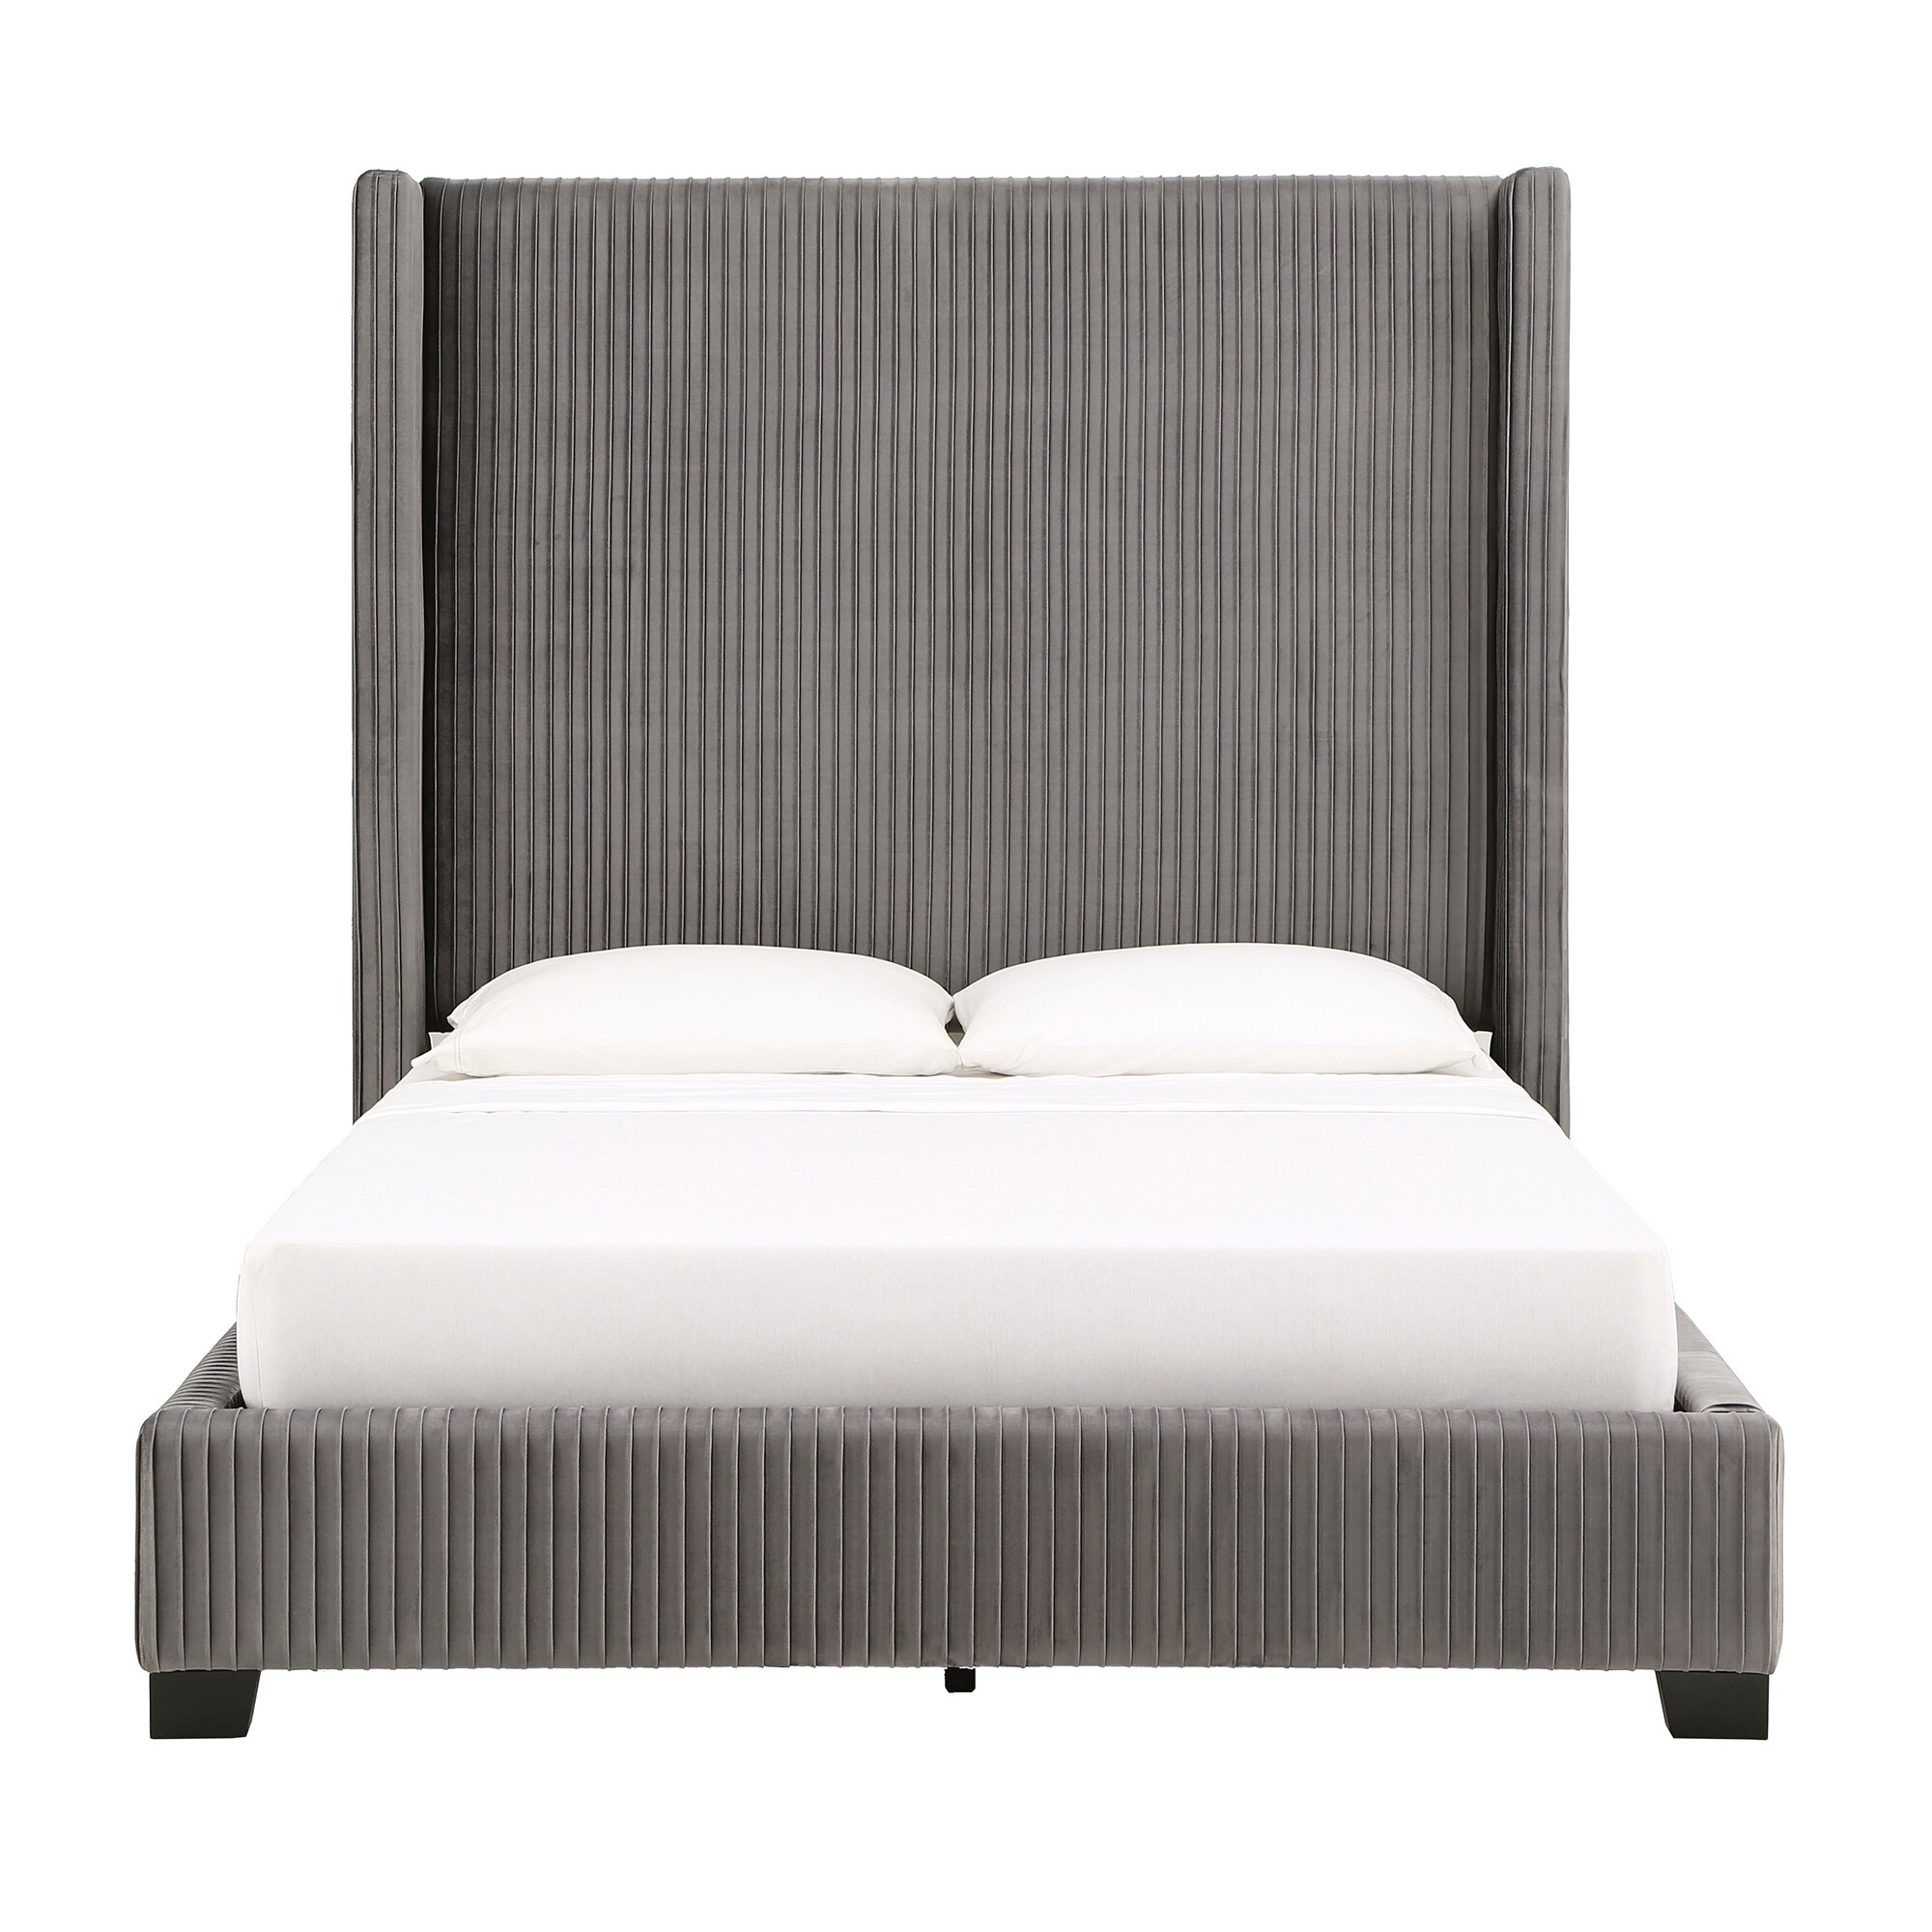 Judith Pleated Velvet Wingback Bed By Inspire Q Modern On Sale Overstock 31440608